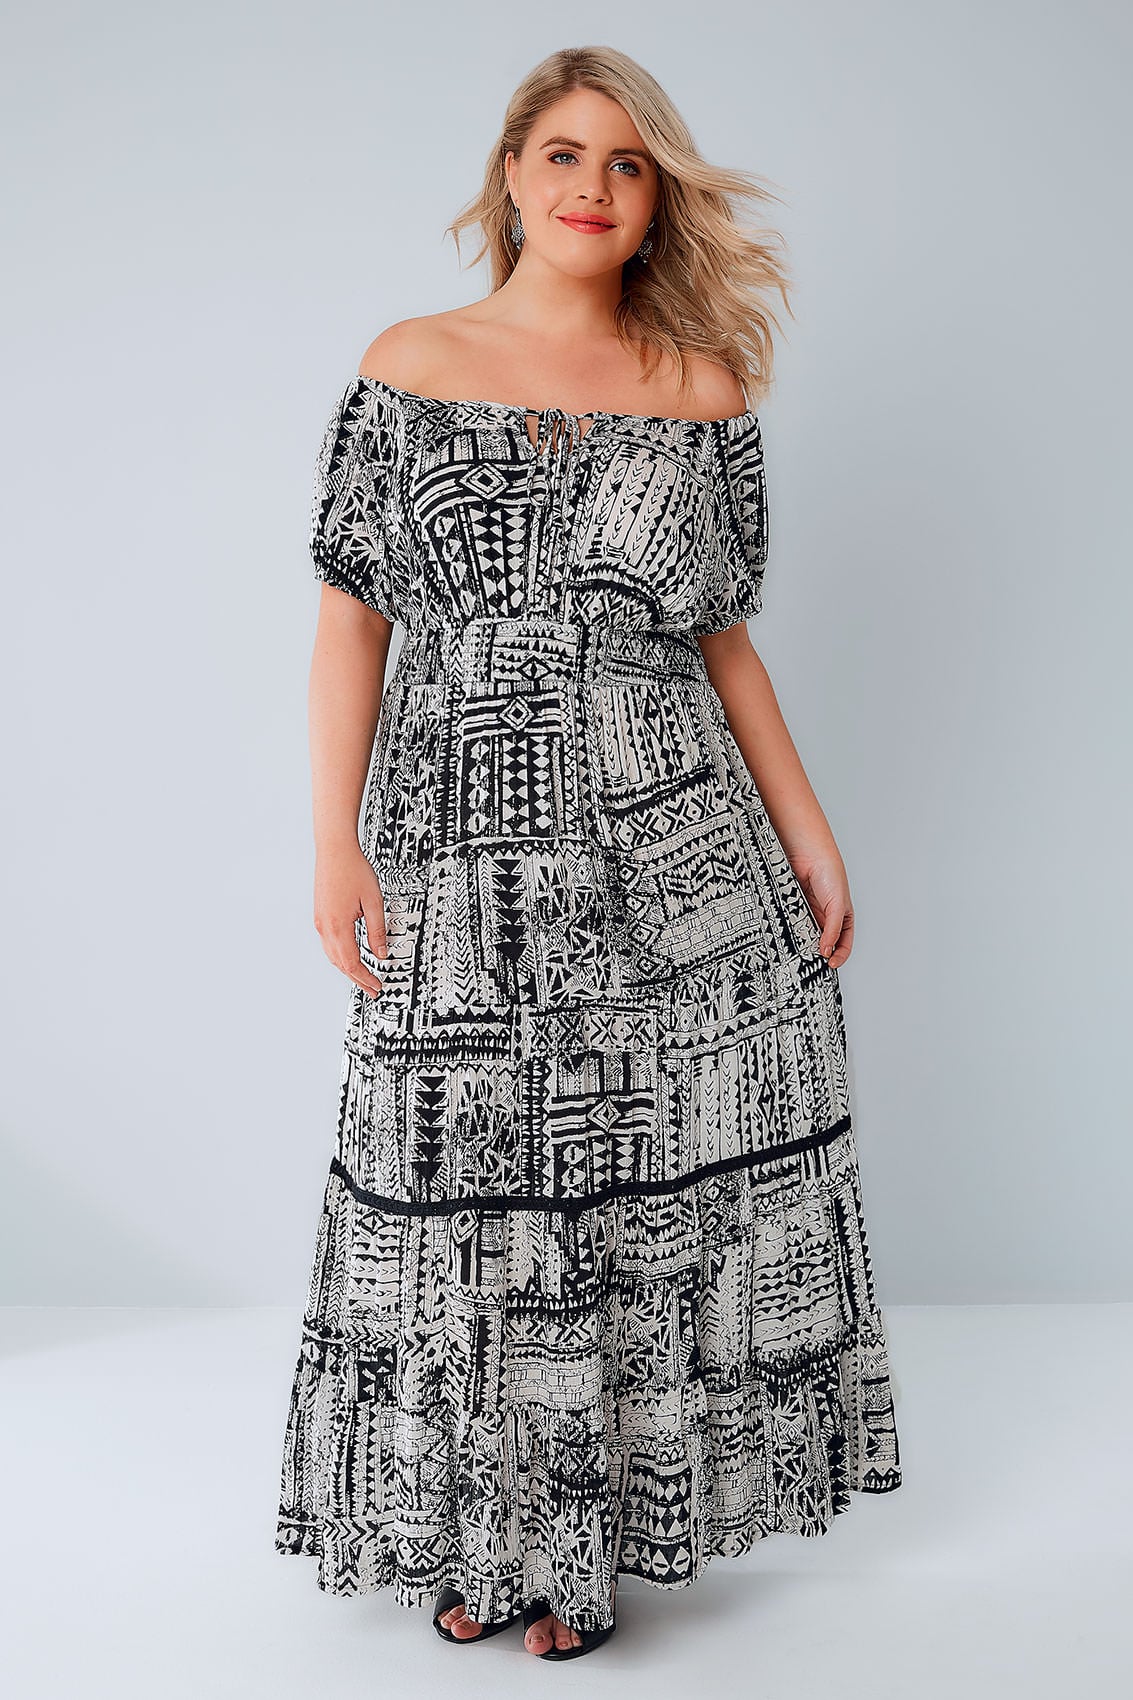 Black & White Tribal Print Gypsy Maxi Dress, Plus size 16 to 36